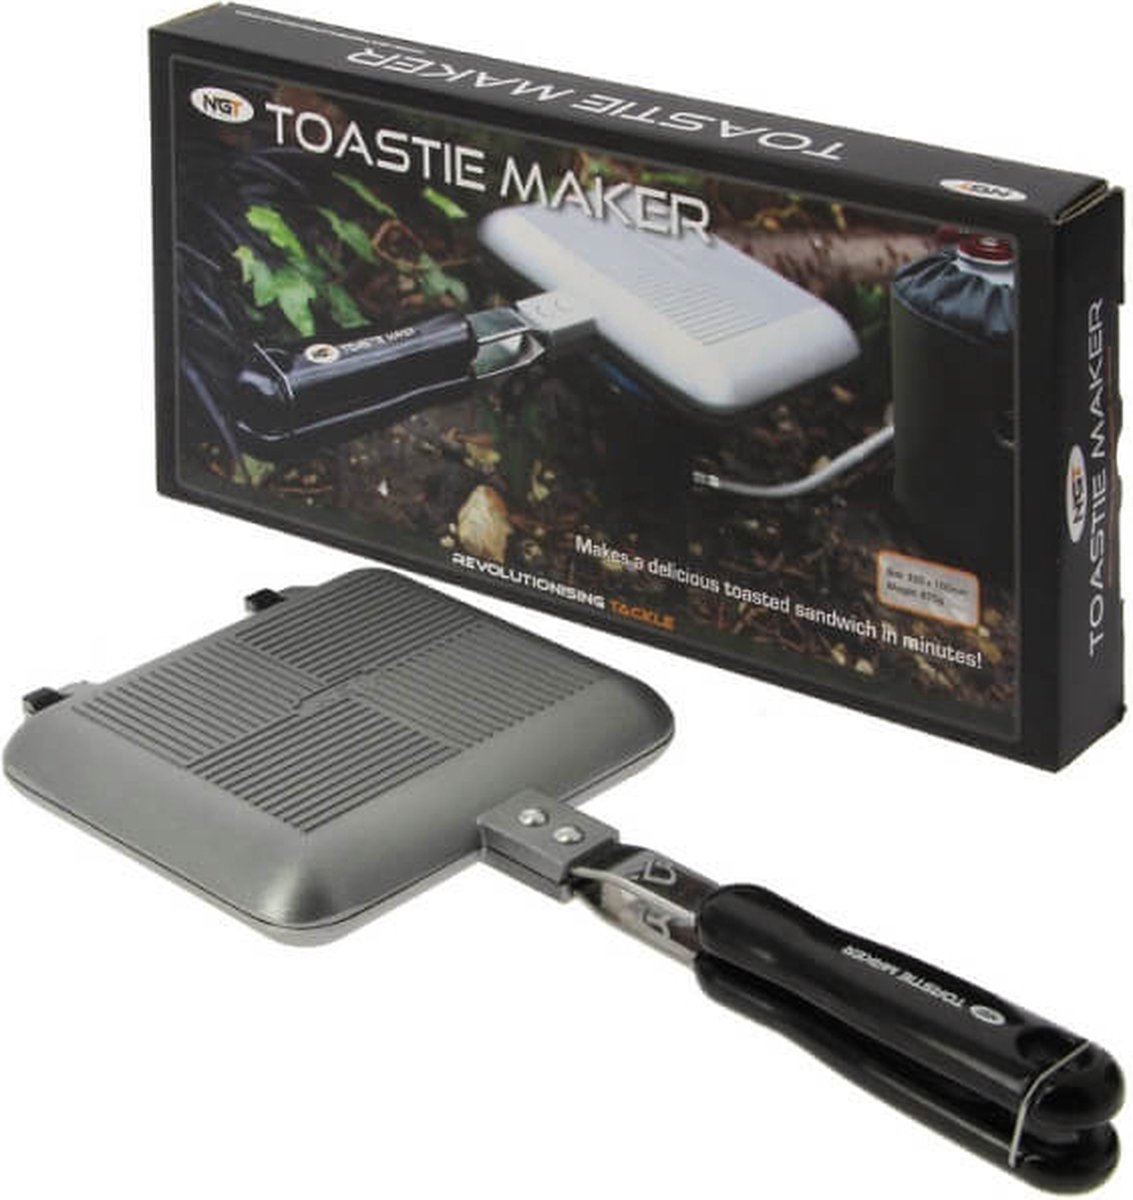 NGT Bankside Sandwich Toaster - Gun Metal (Small) | Camping bestek